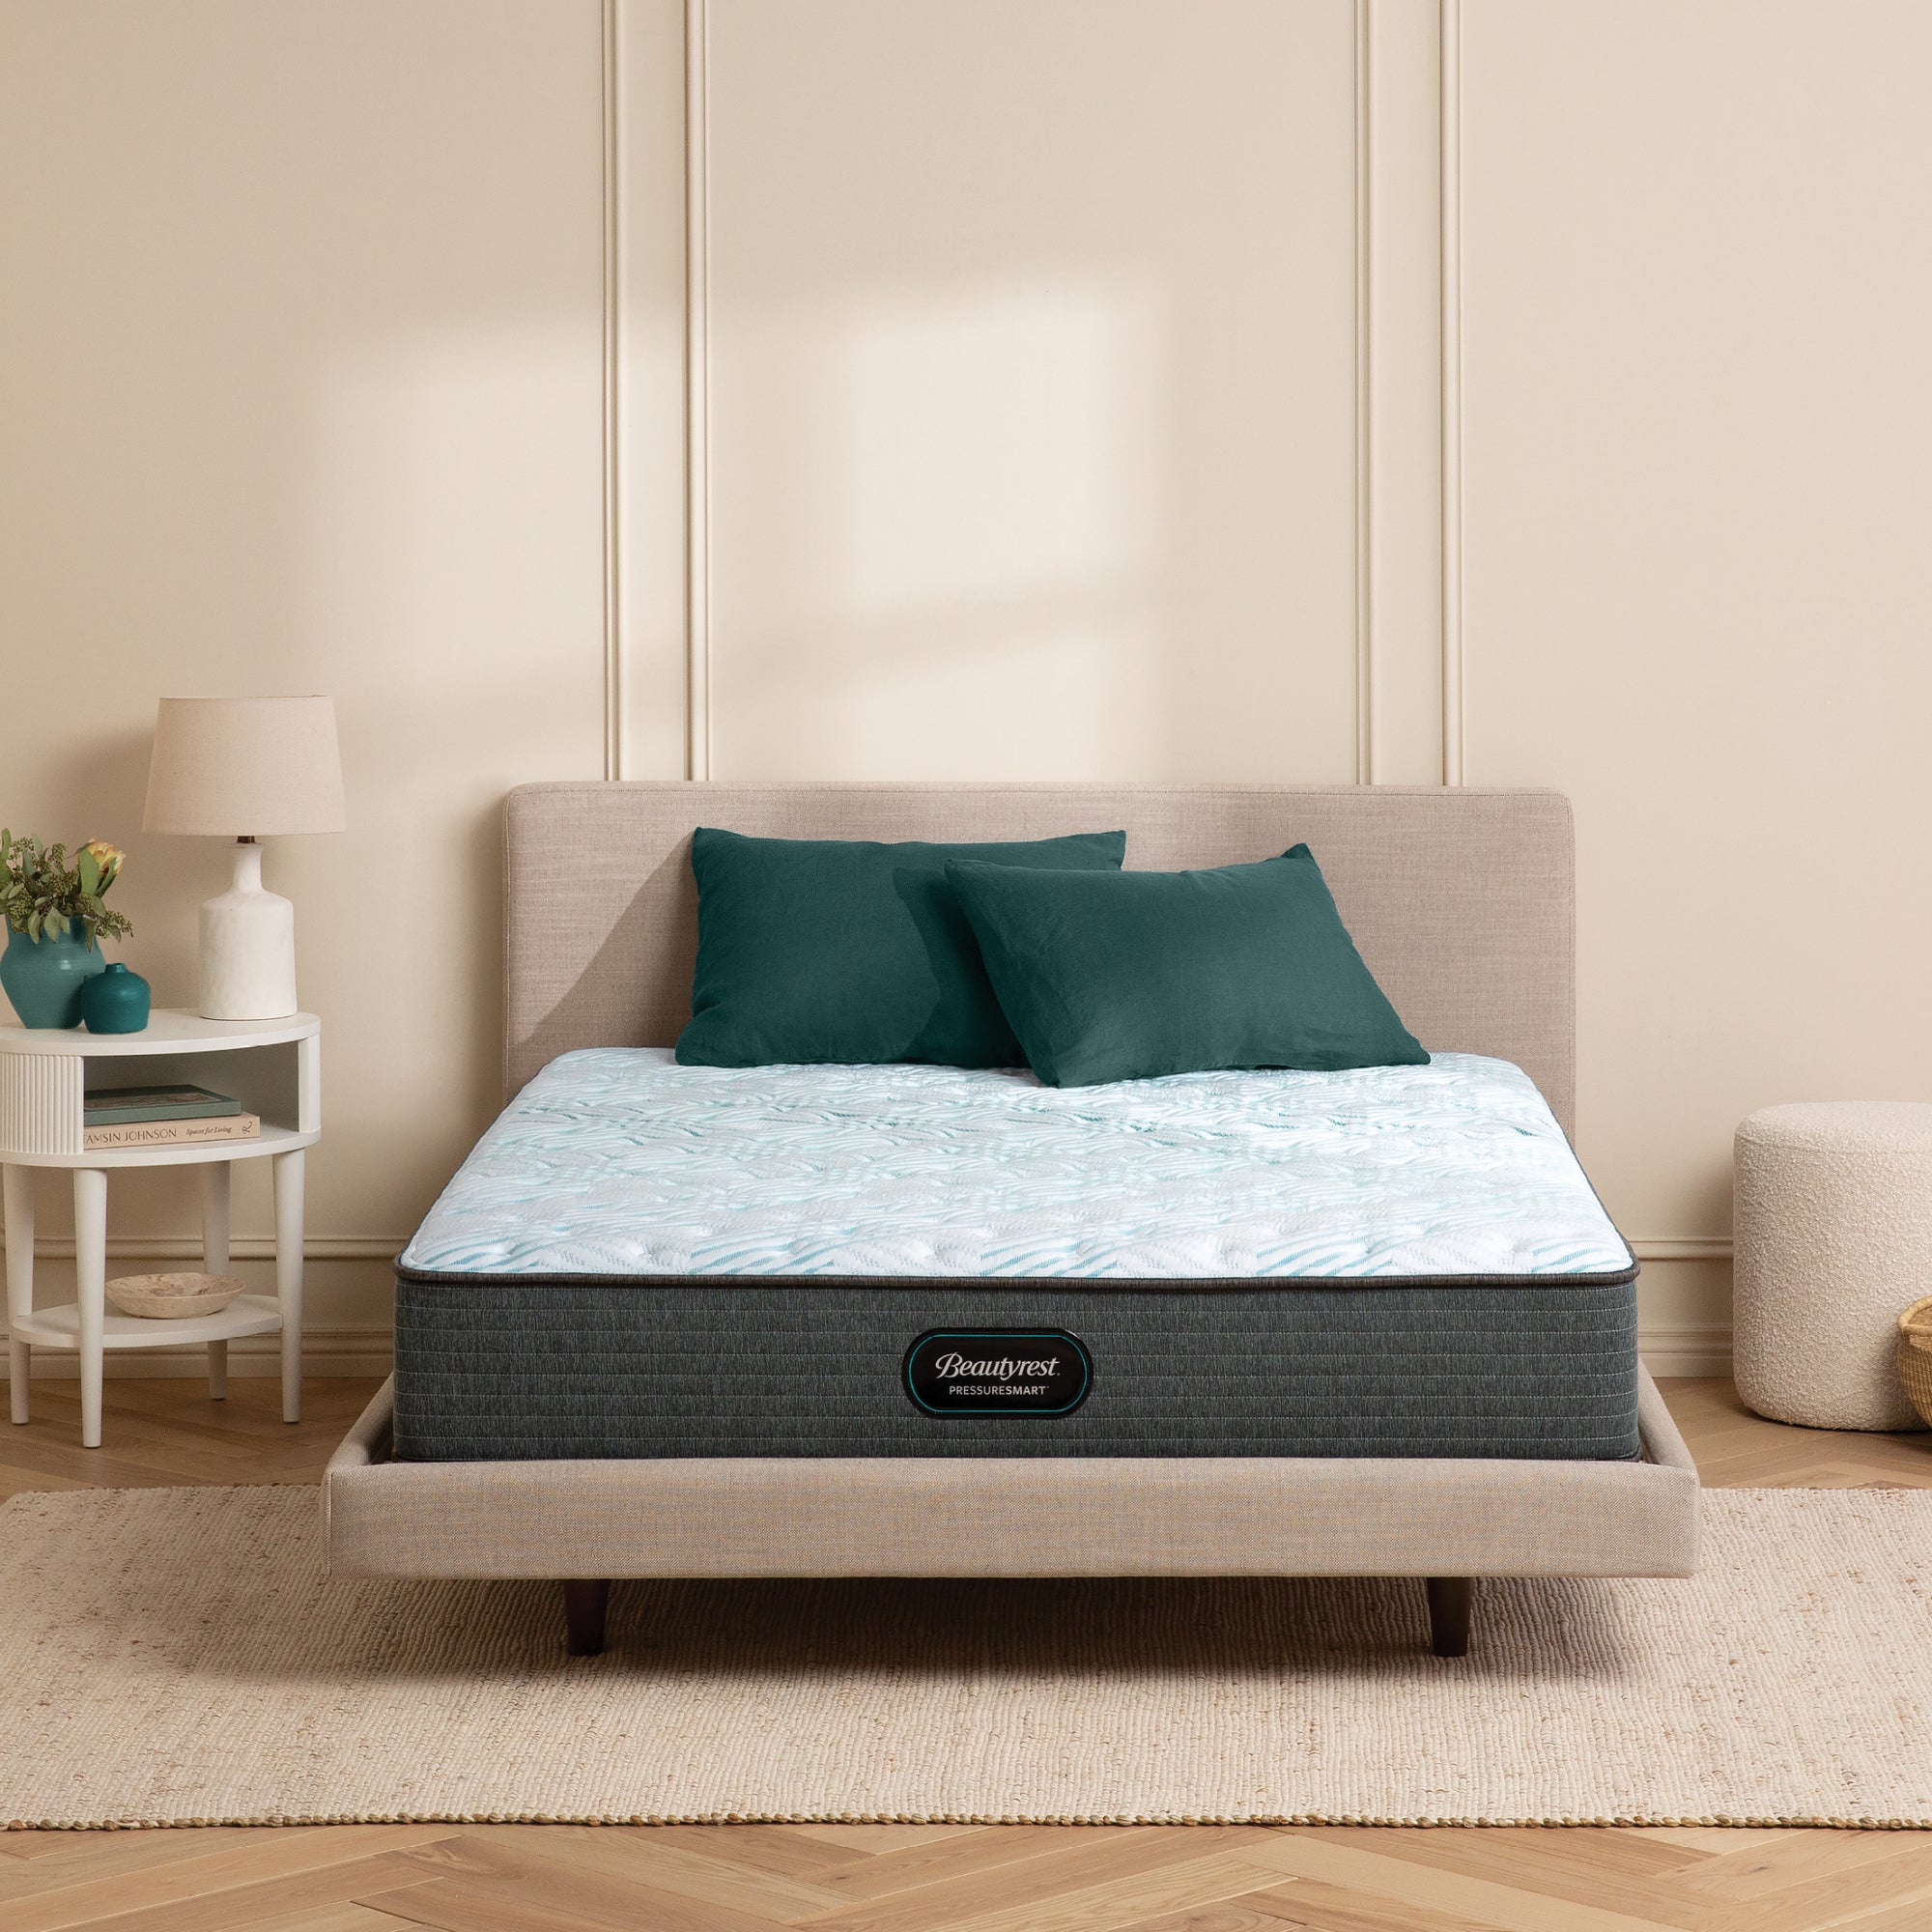 The Beautyrest PressureSmart mattress in a bedroom||feel: extra firm||series: standard